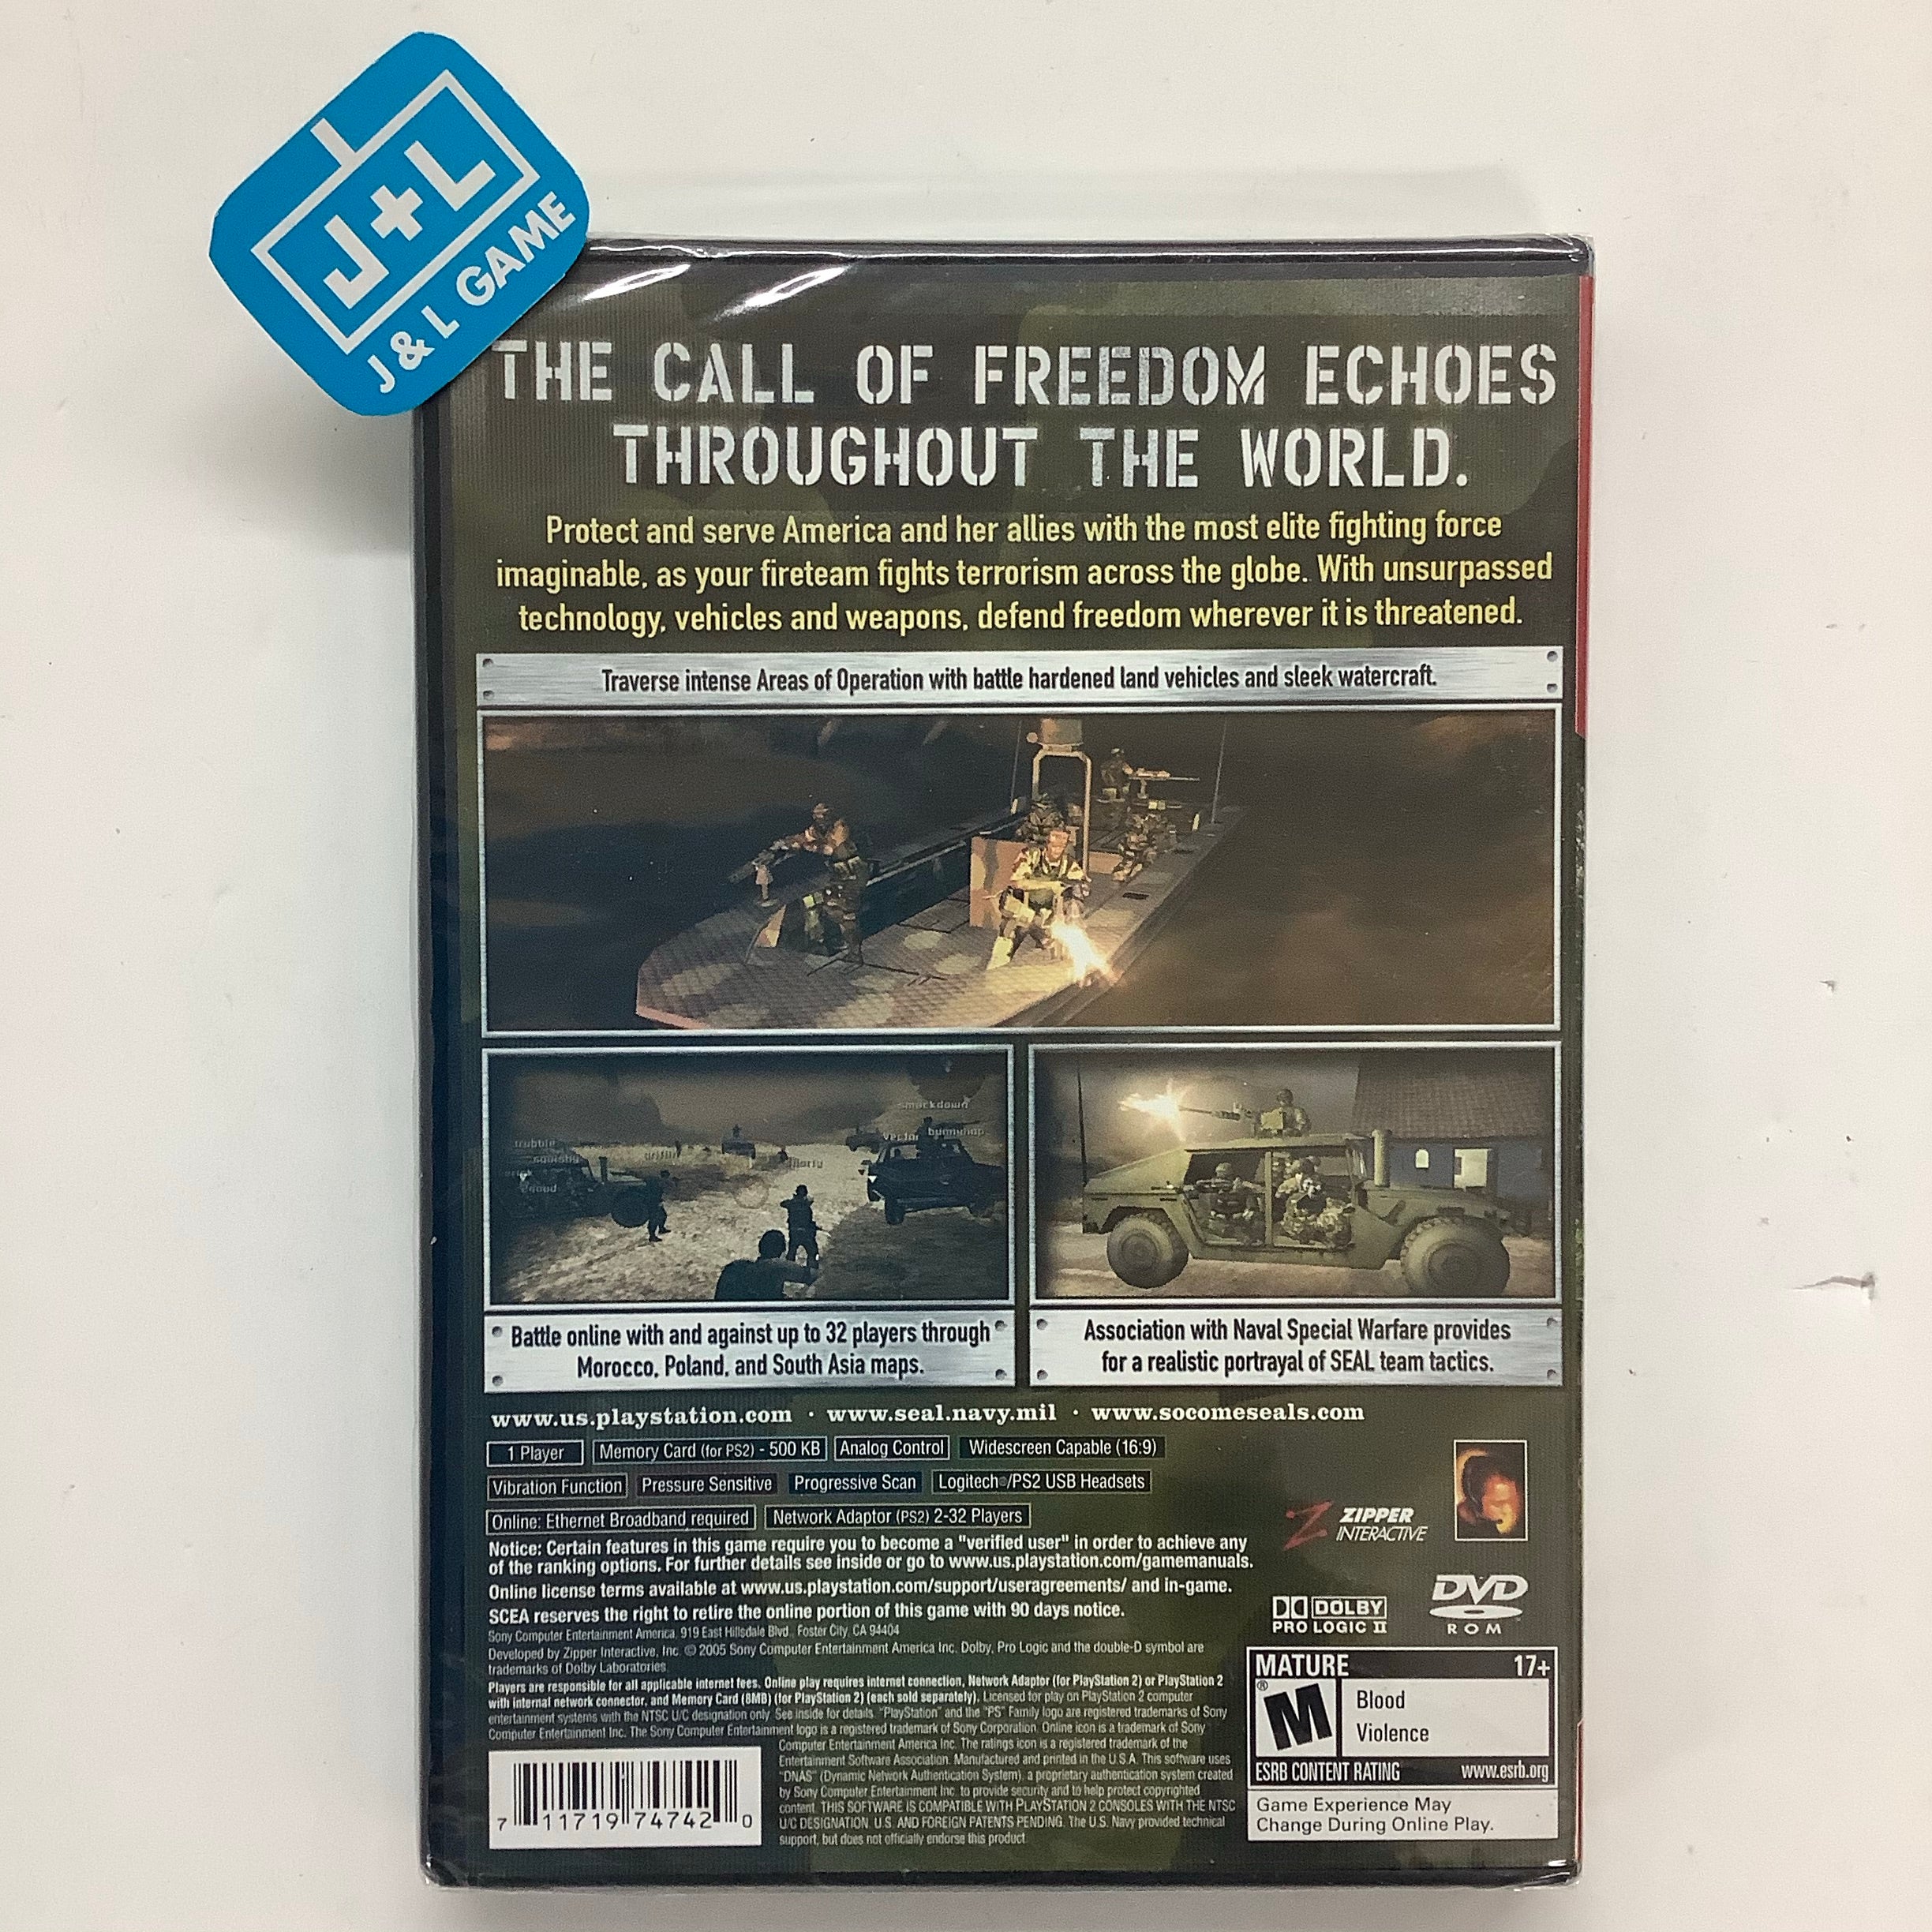 SOCOM 3: U.S. Navy SEALs (Greatest Hits) - (PS2) PlayStation 2 Video Games SCEA   